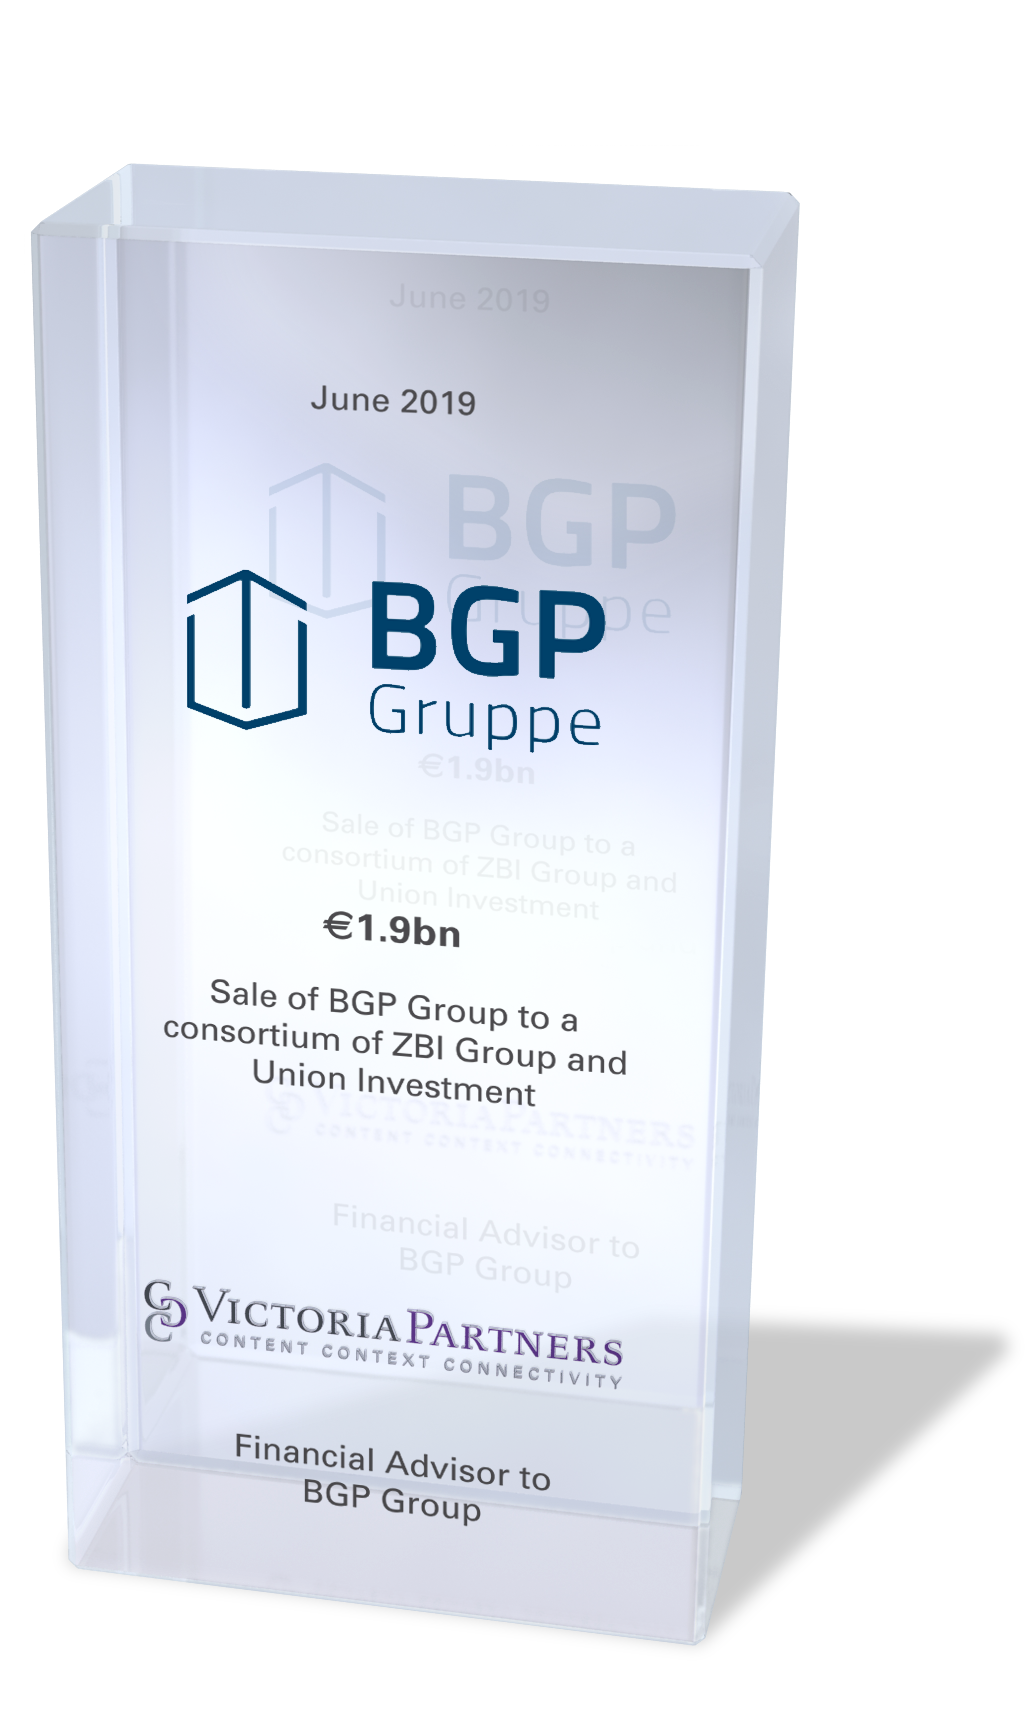 VICTORIAPARTNERS - Financial Advisor to BGP Group - June 2019